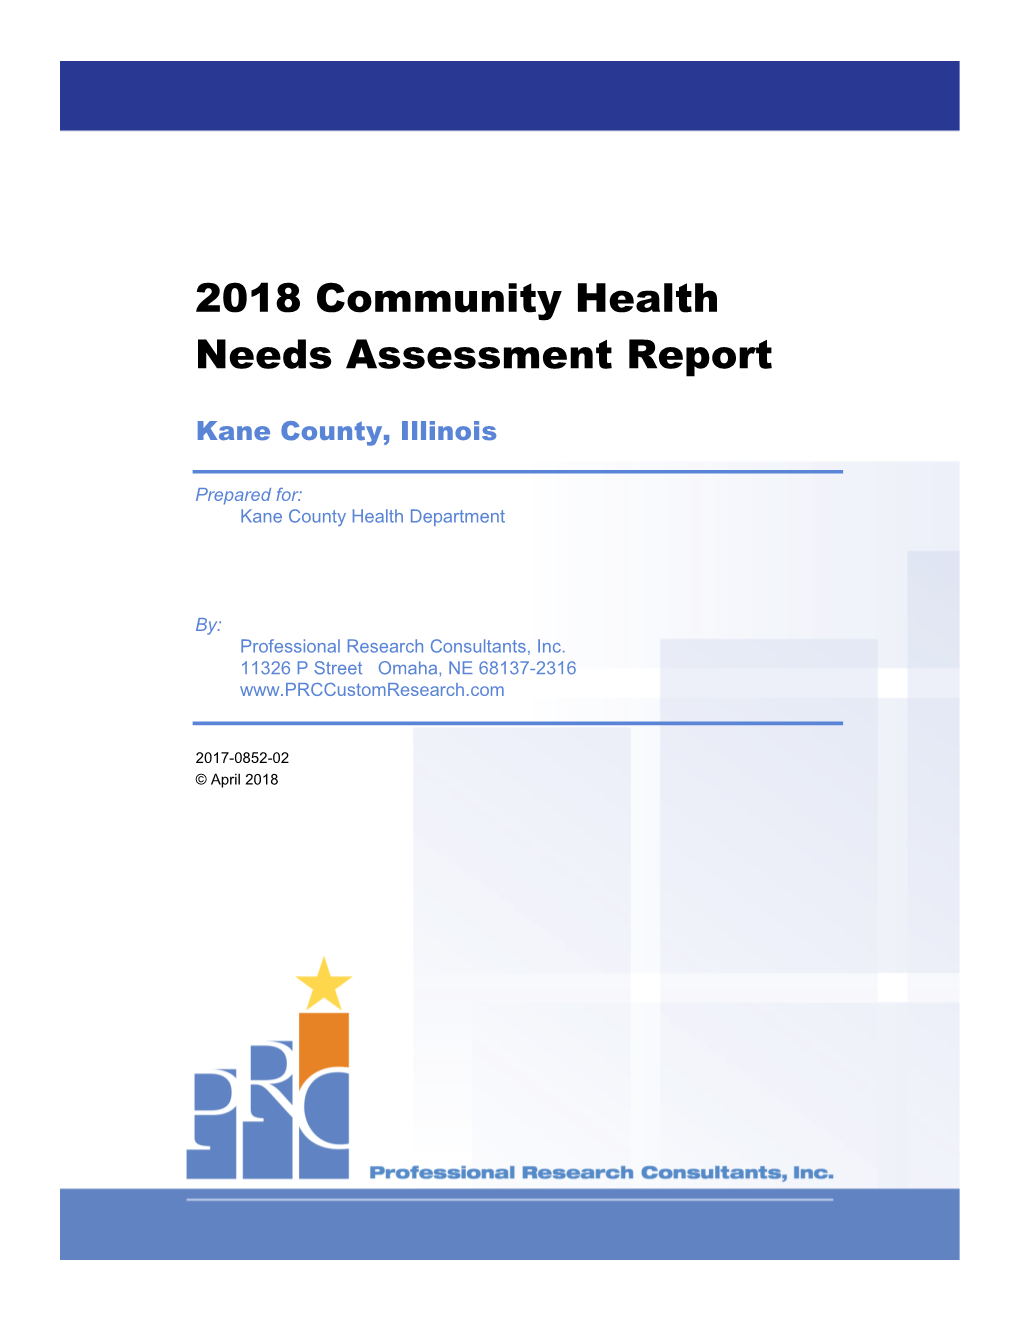 2018 Community Health Needs Assessment Report